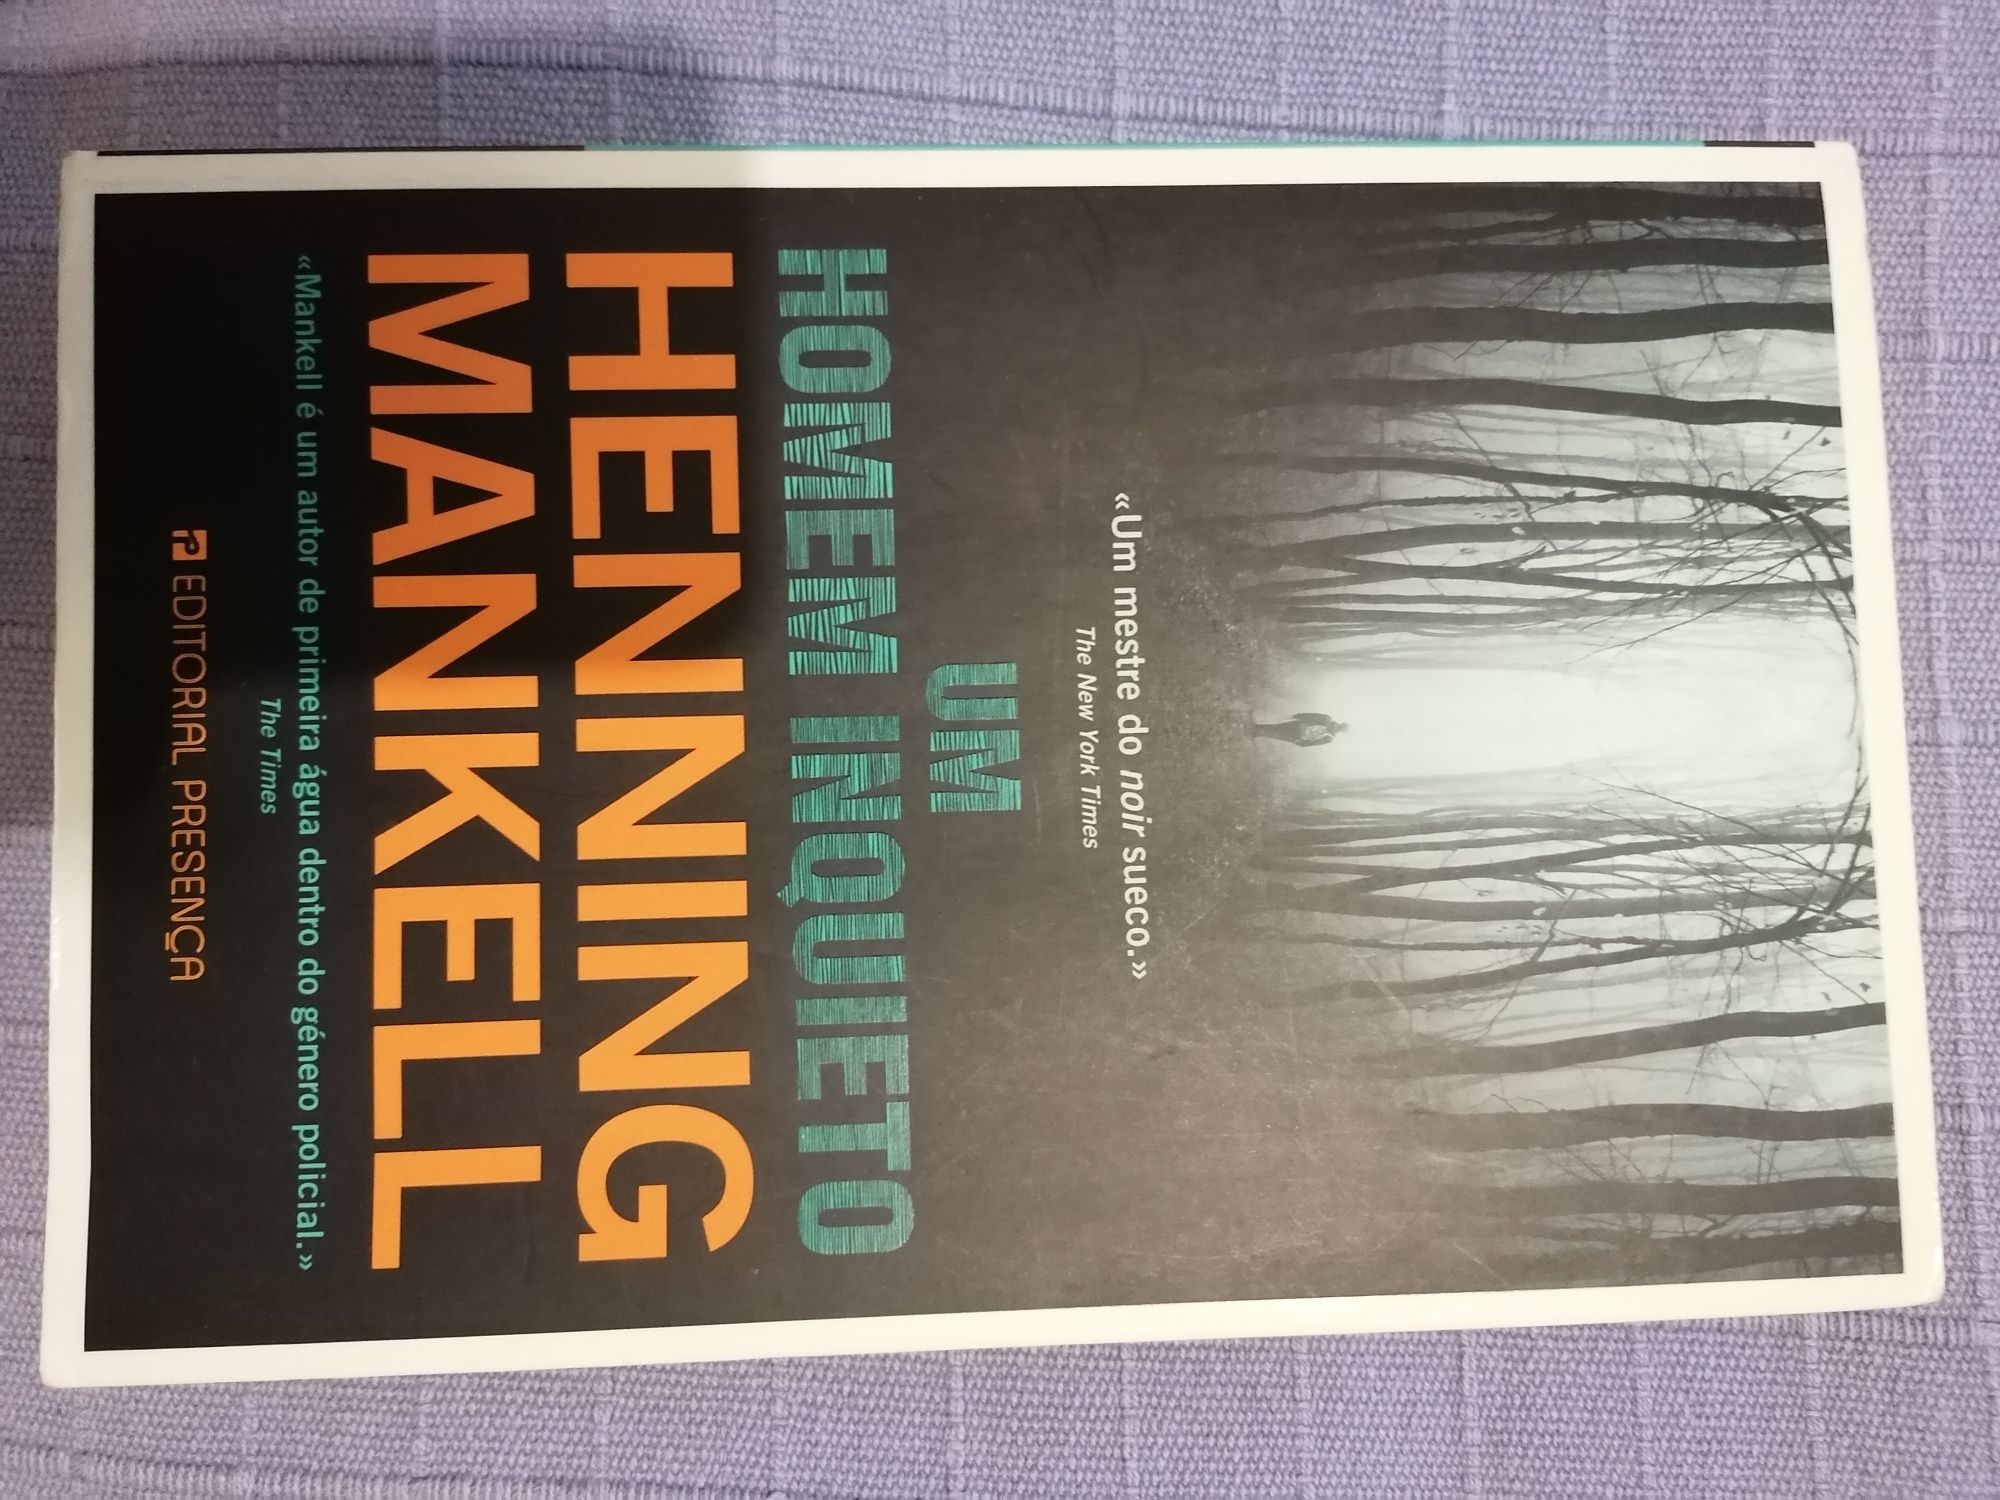 livro Henning Mankel - "Um homem inquieto"